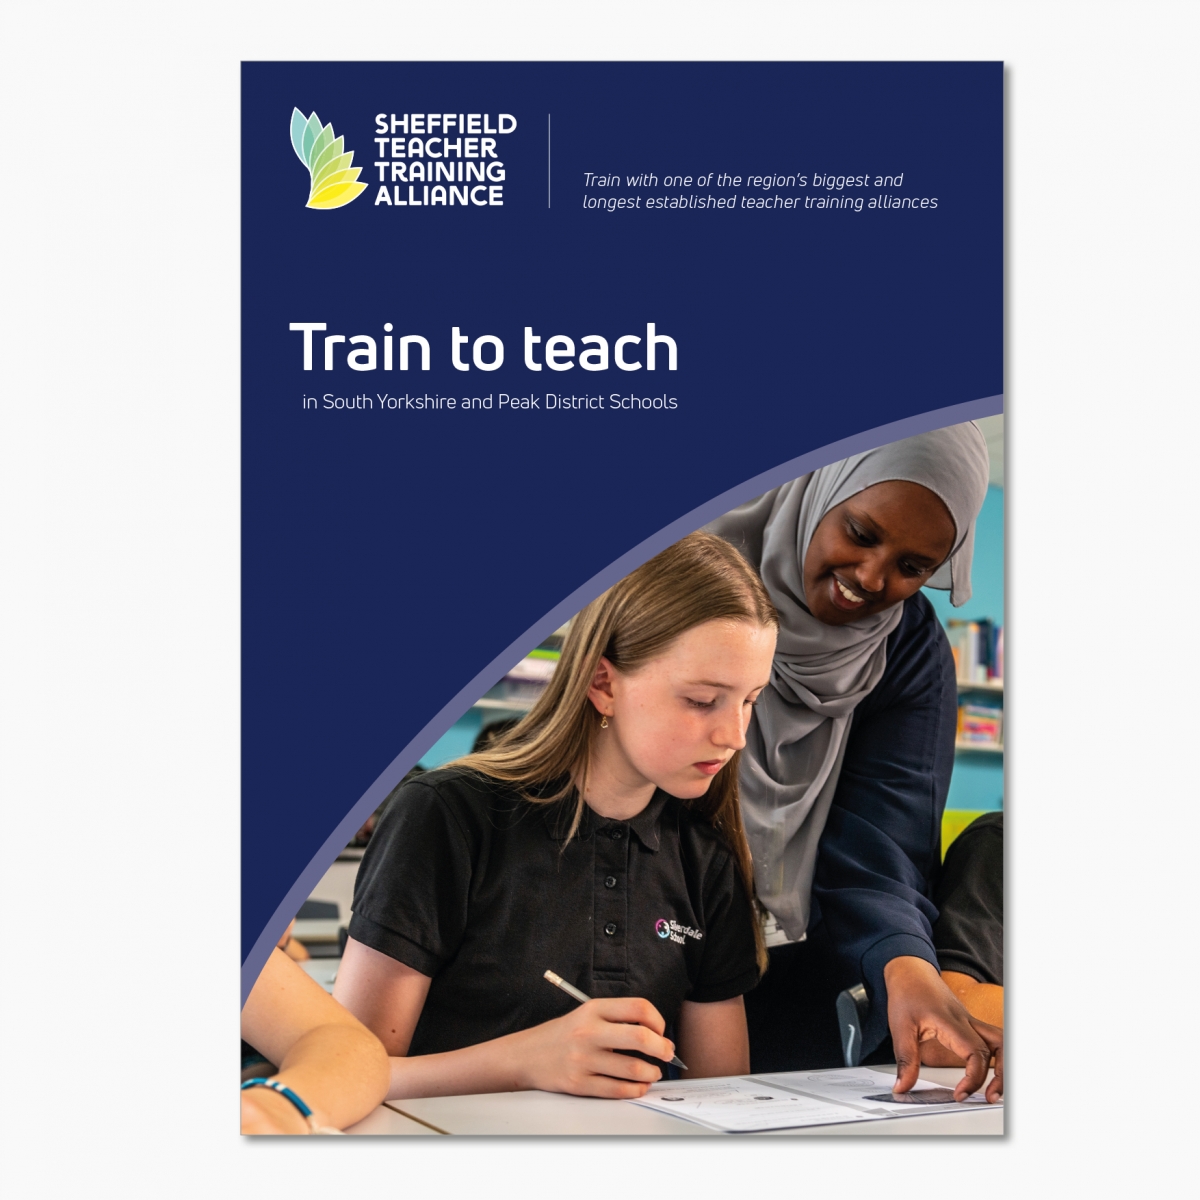 Sheffield Teaching Training Alliance